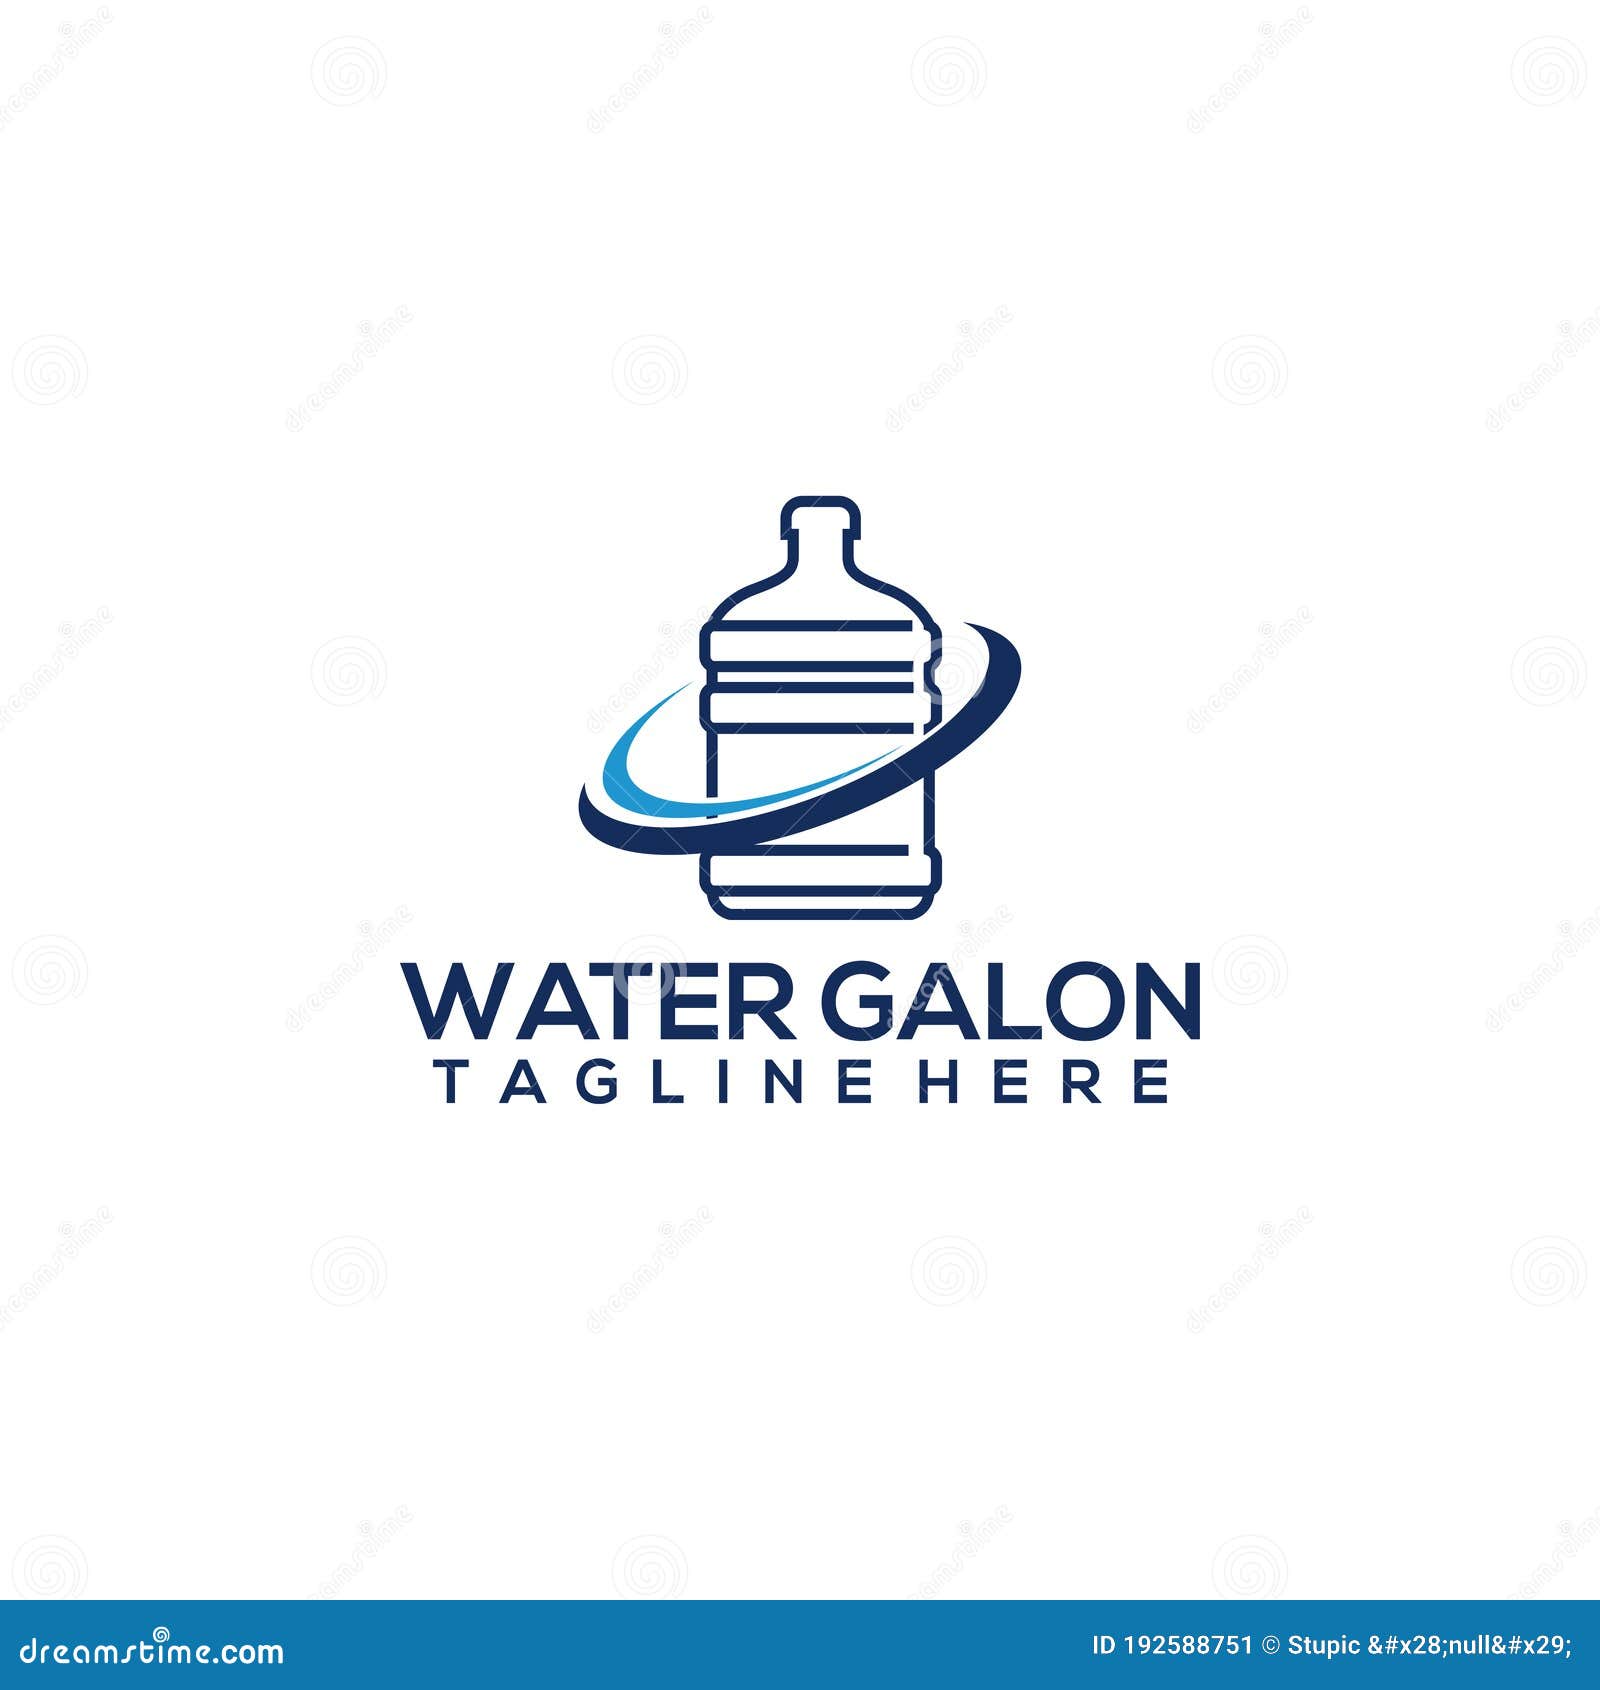 Water Gallon Logo Concept Vector | CartoonDealer.com #192588631